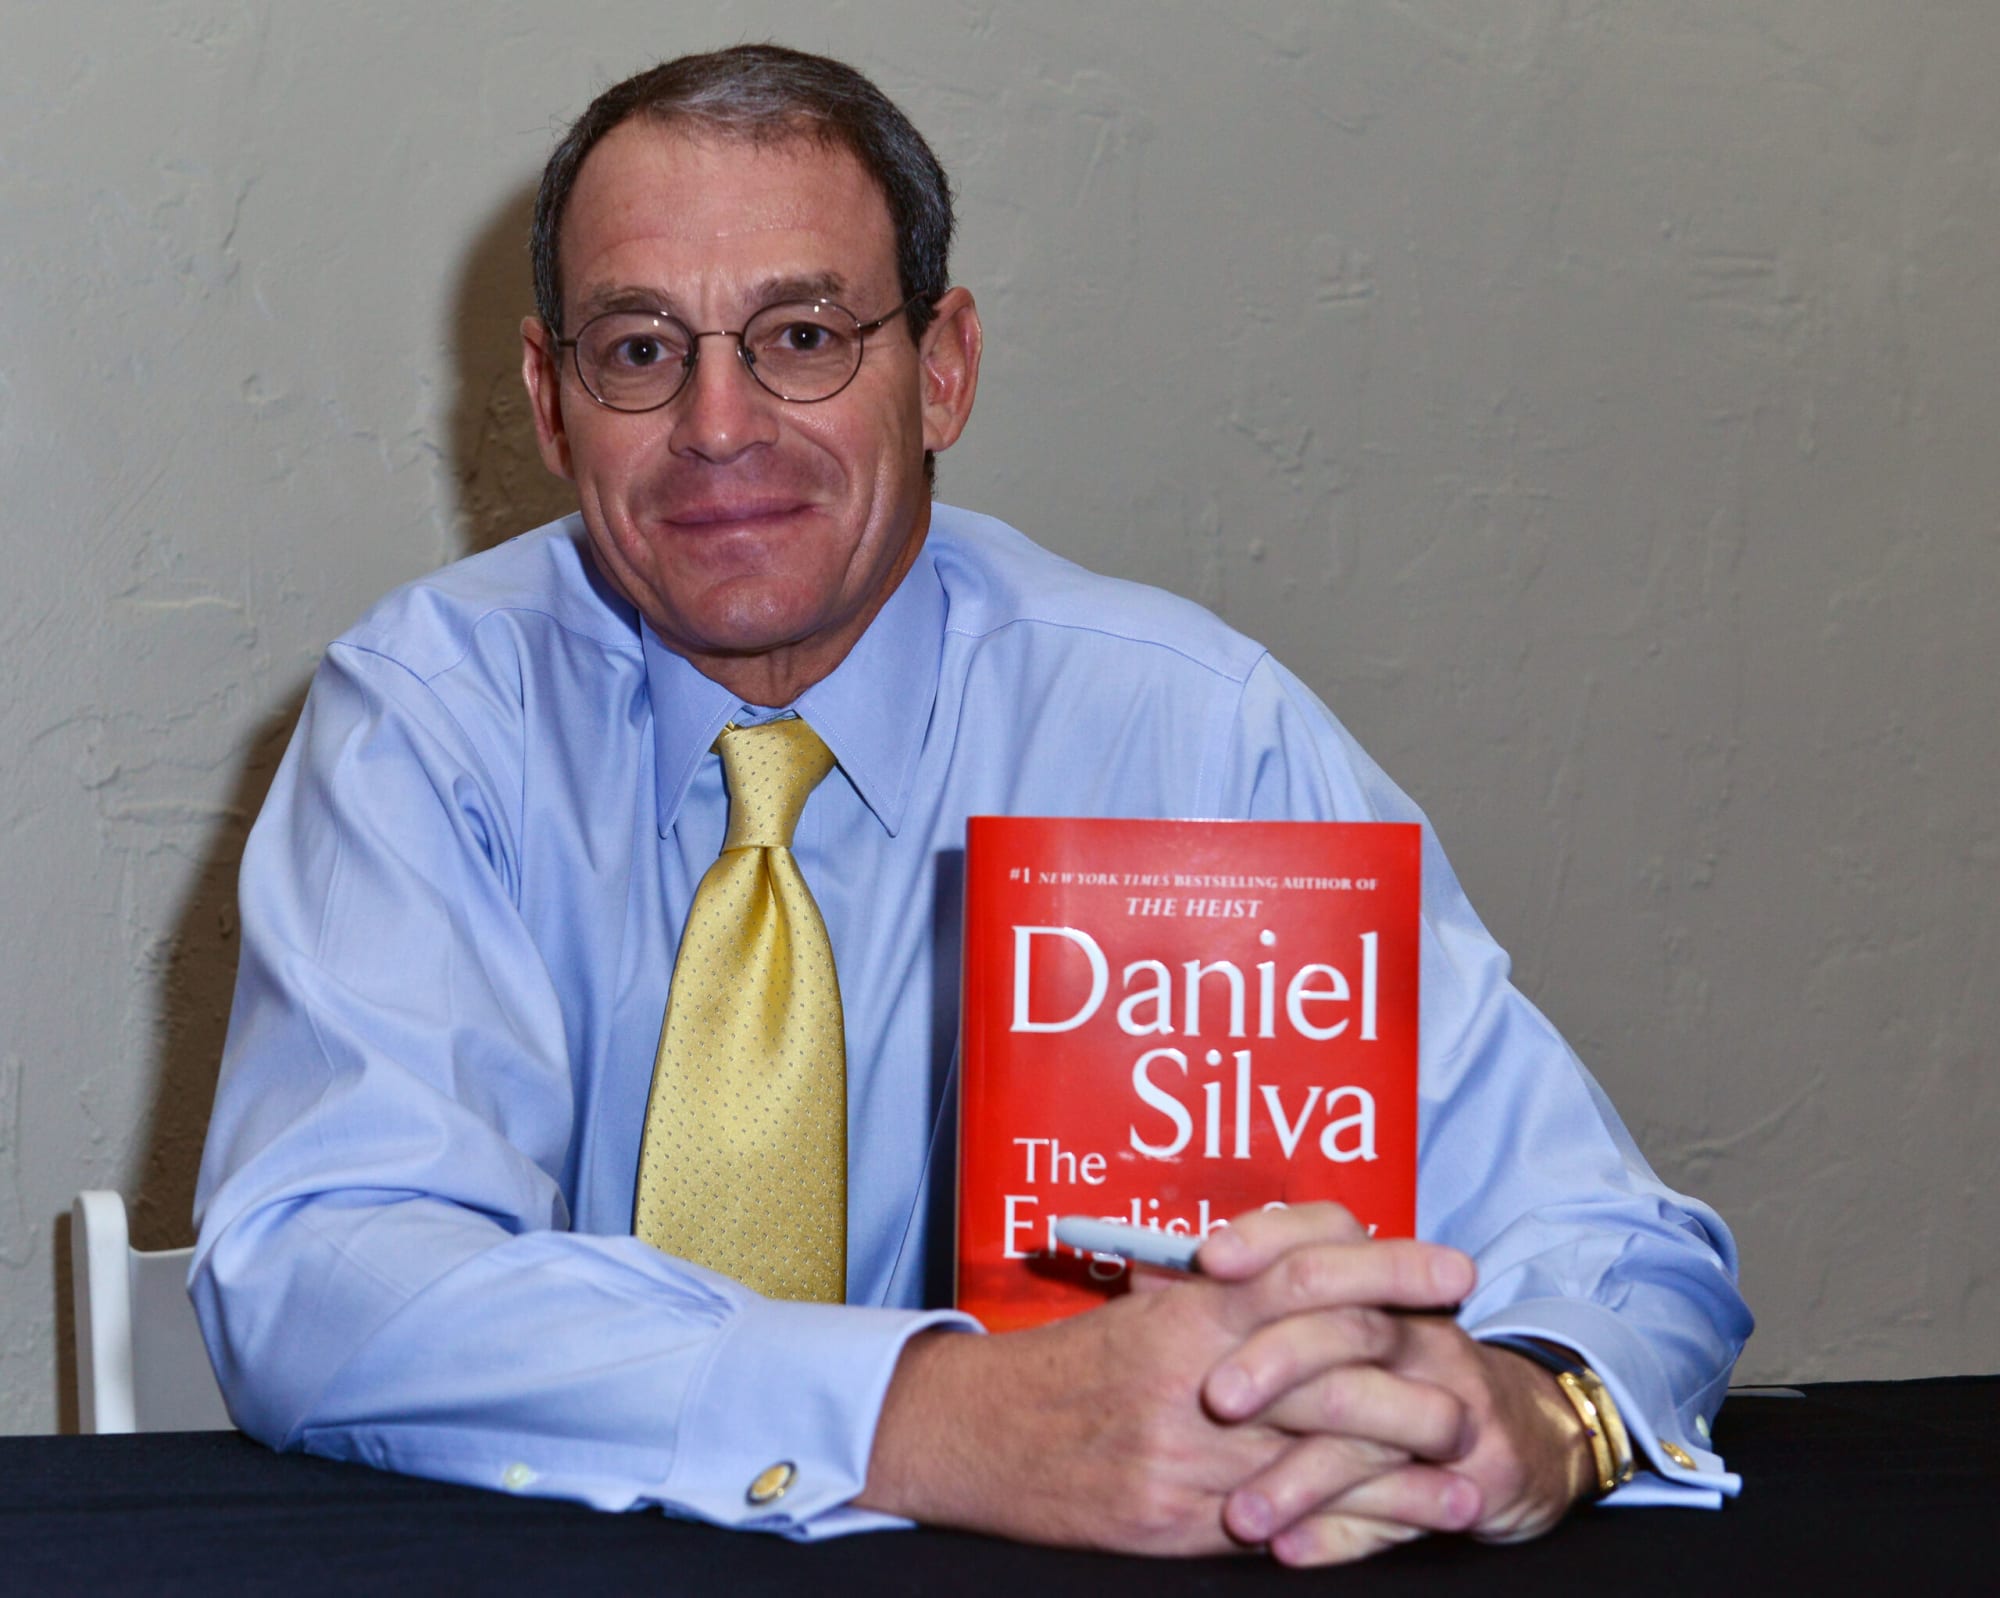 Most read Amazon books last week New Daniel Silva book enters